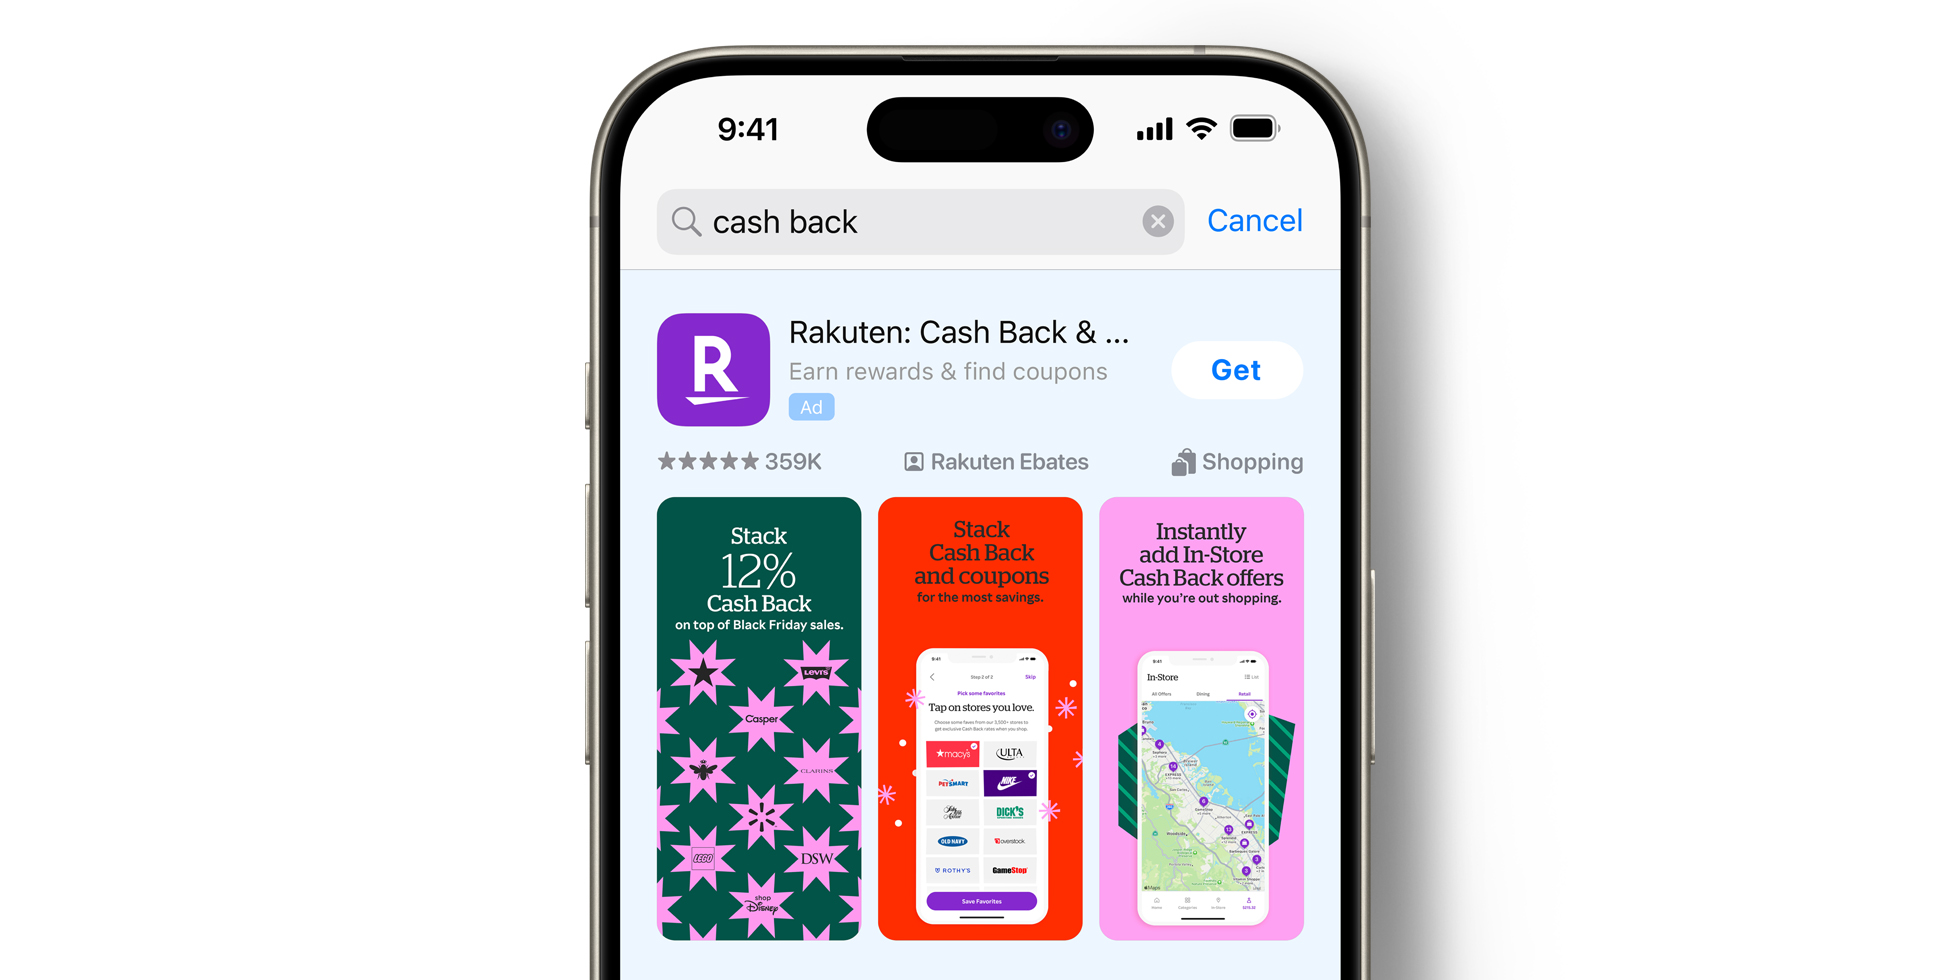 Rakuten: Cash Back & Deals ad on the App Store 